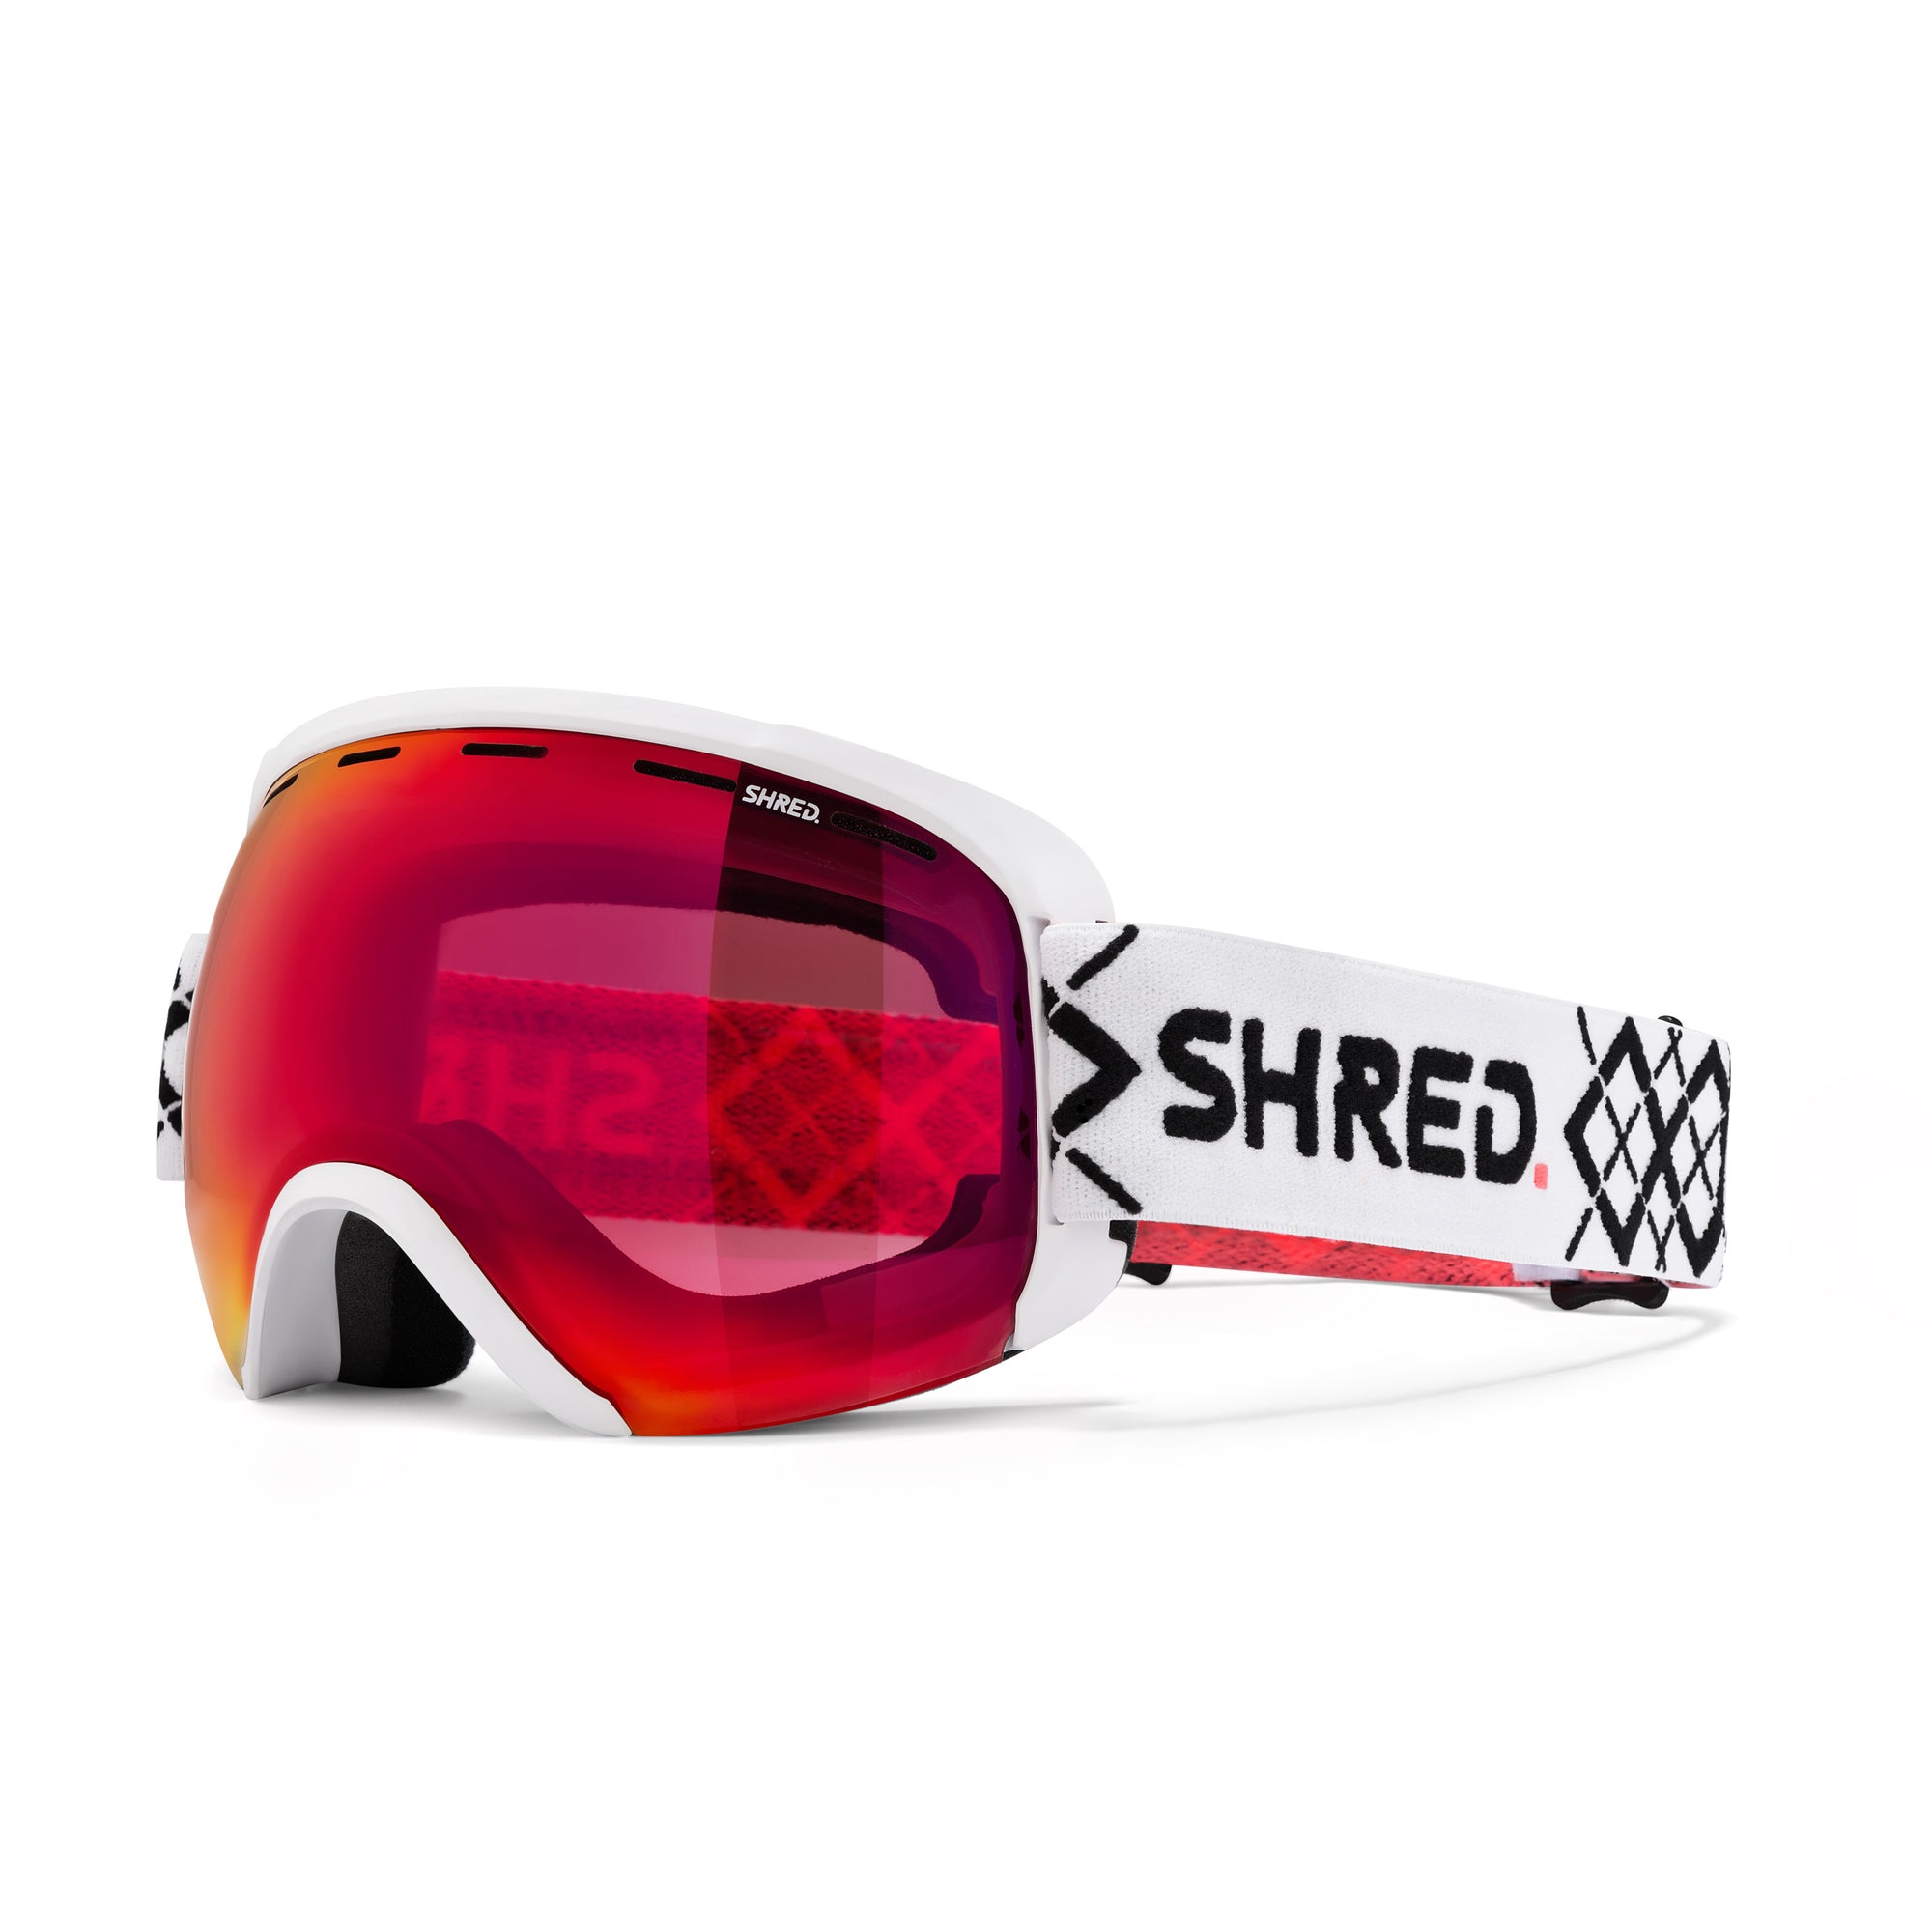 Exemplify - Ski Goggles|GOEXEN24A